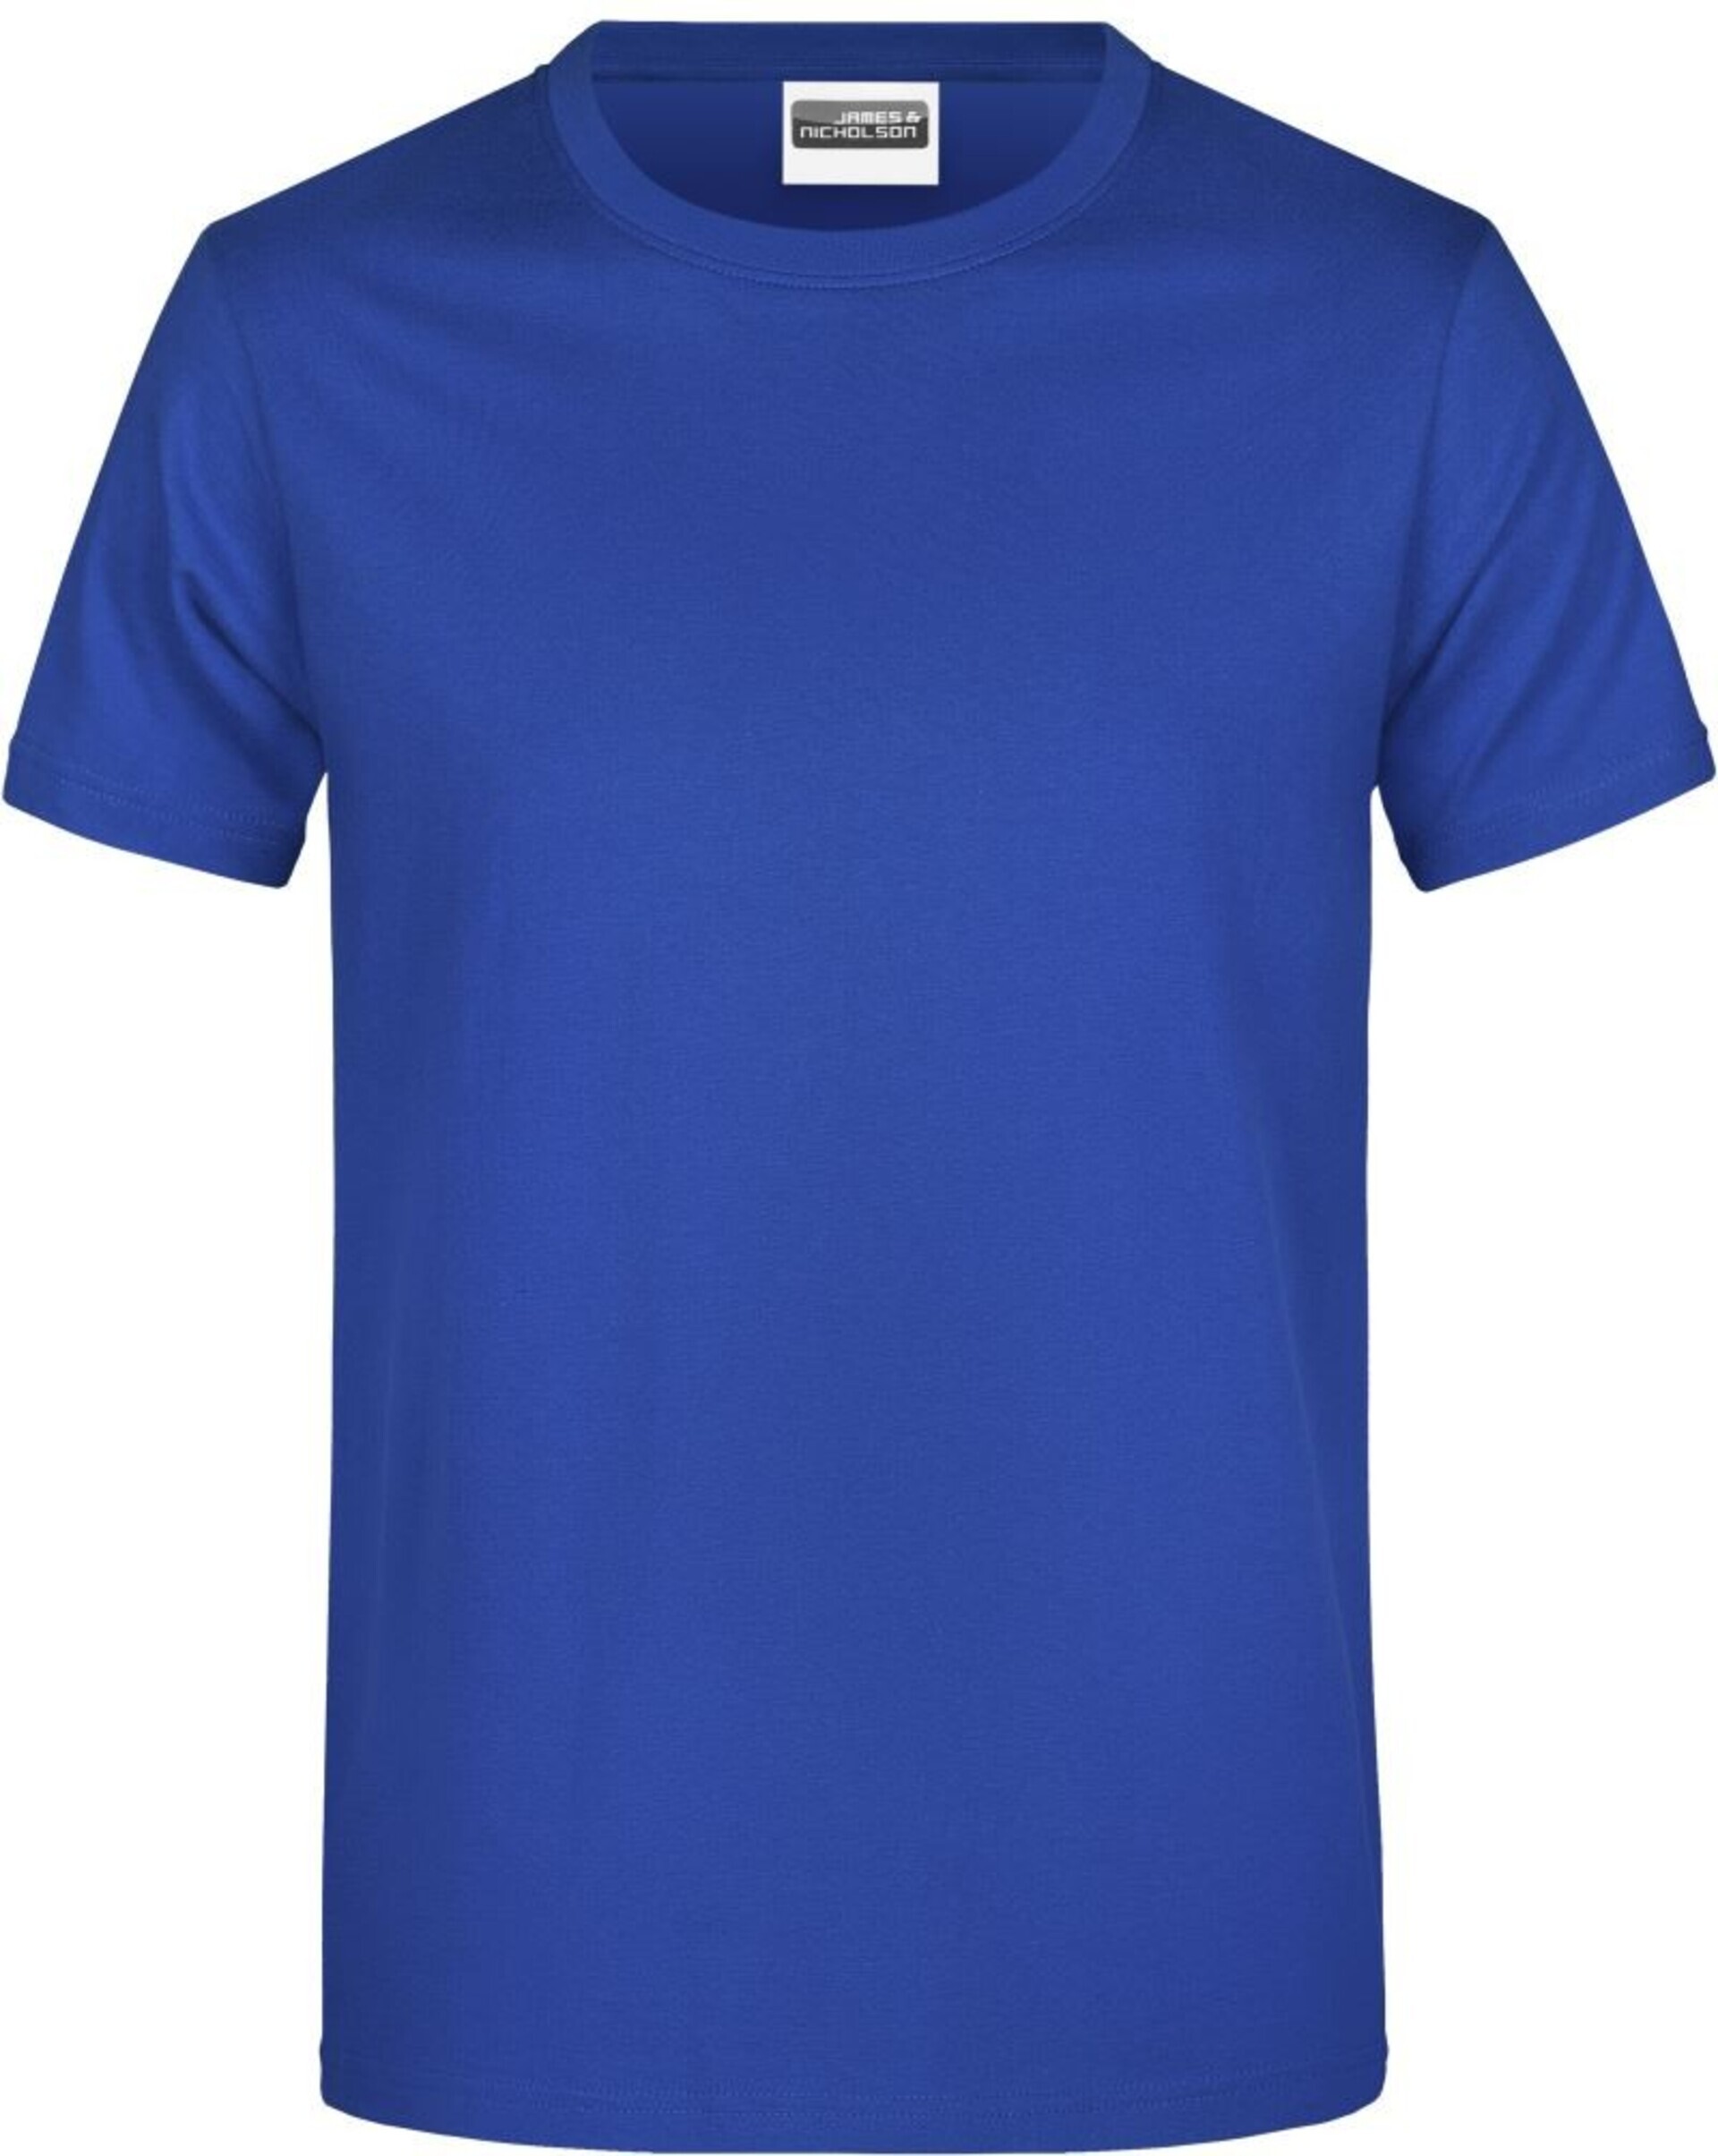 Tričko James & Nicholson 0790 pánské krátký rukáv modrá  L